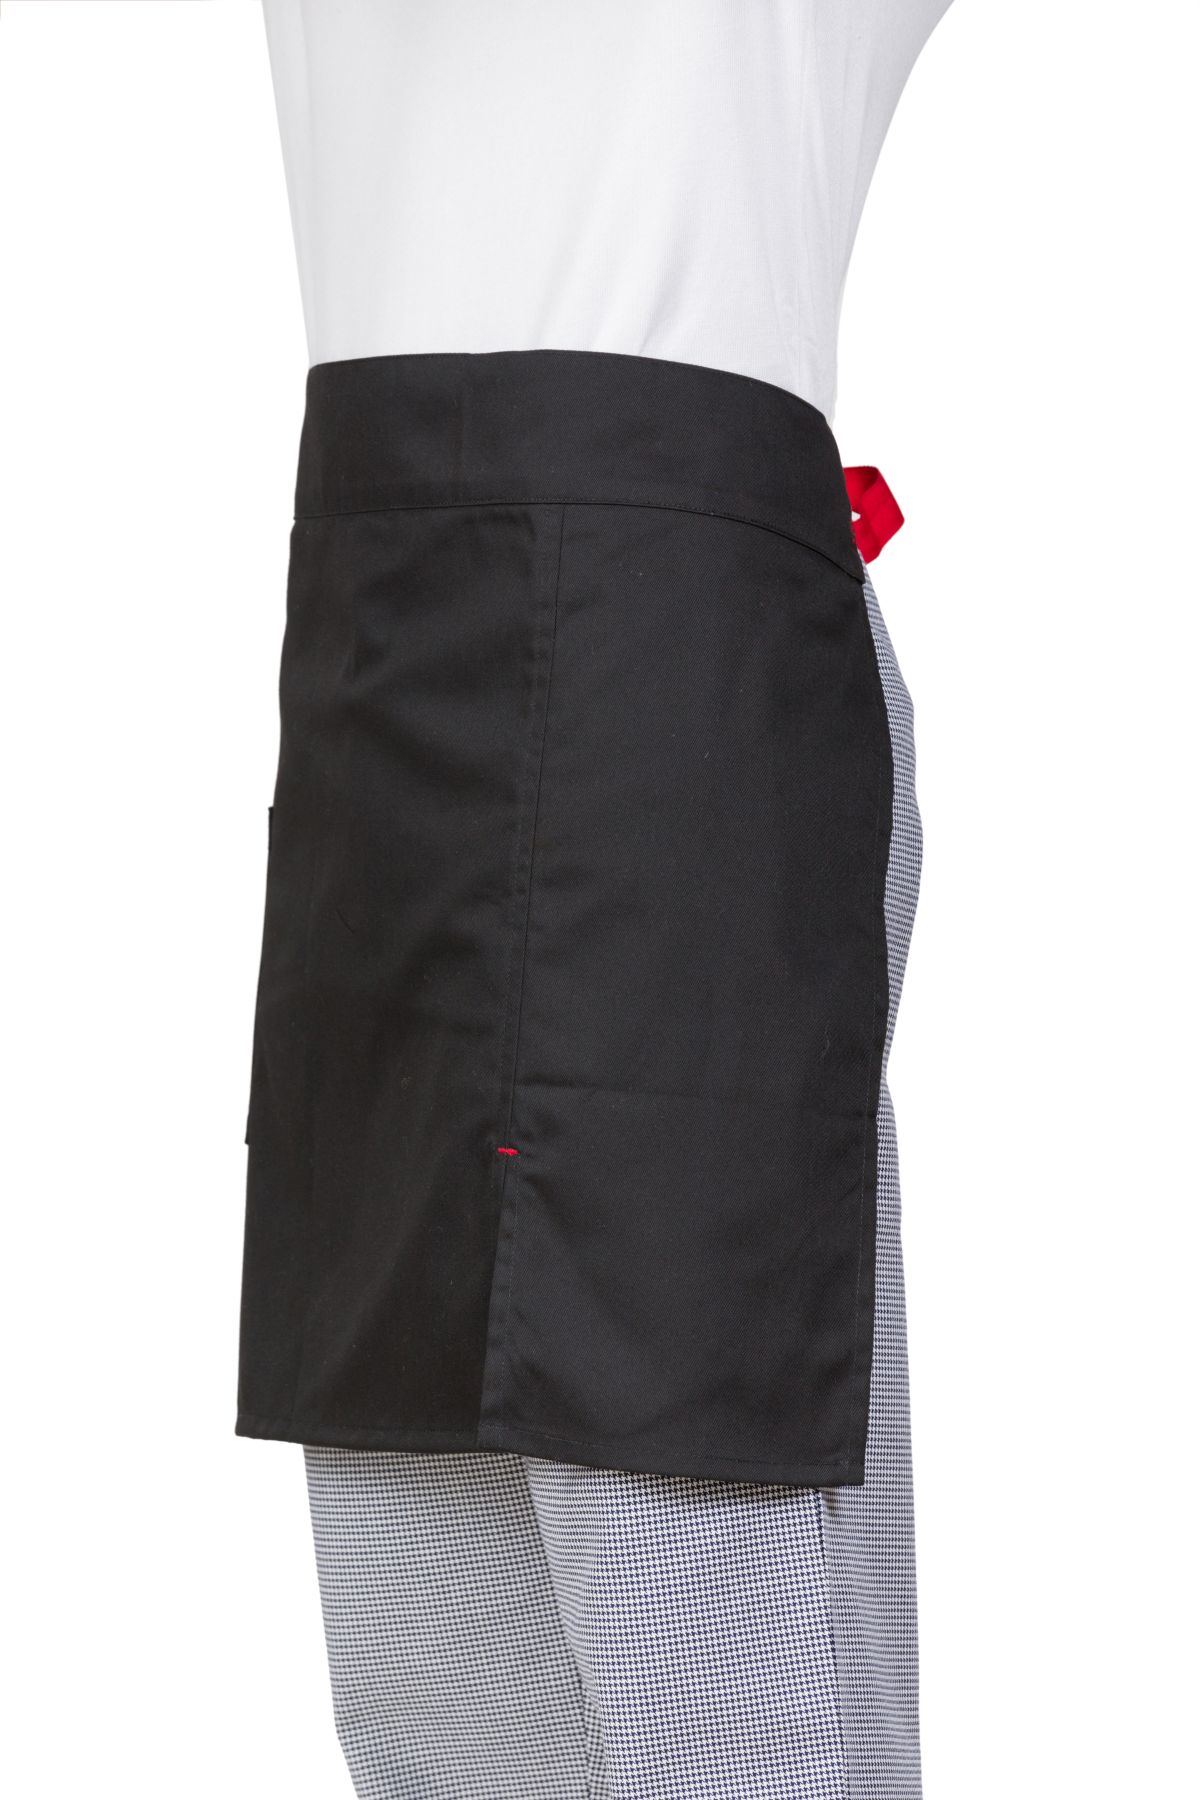 Cotton Blend Easy Fit Adjustable Ergonomic Front Pocket Black Waist Apron